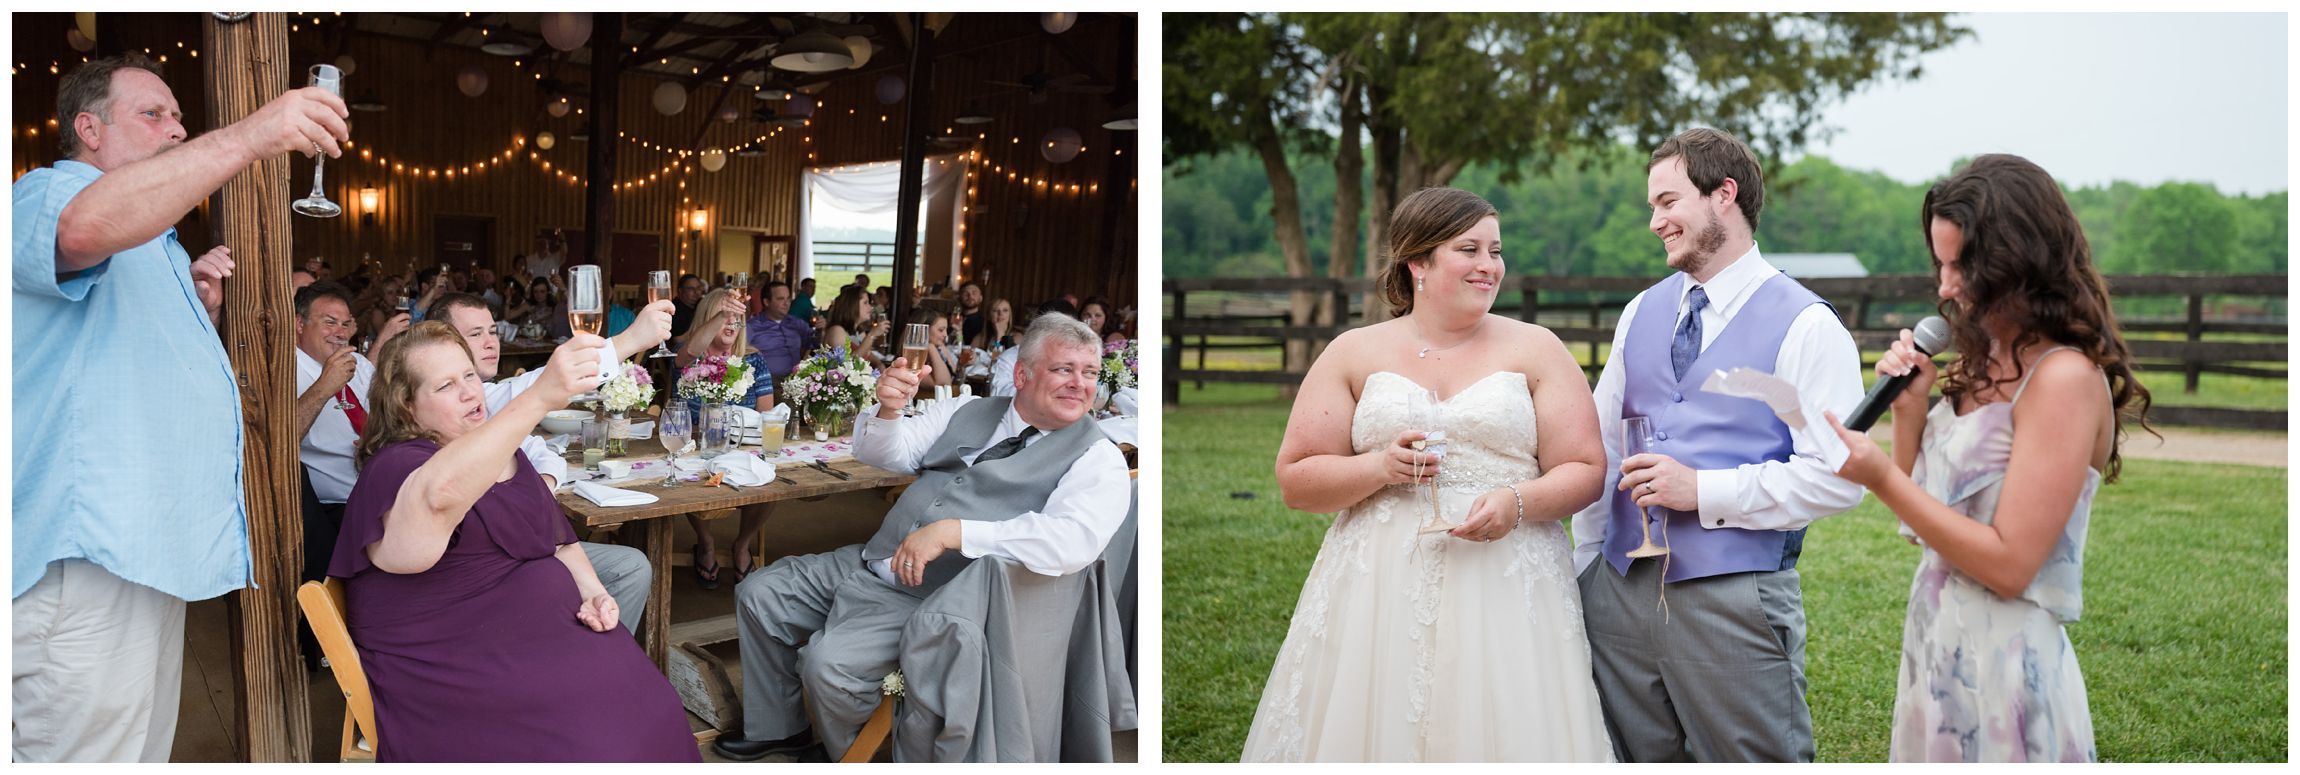 toasts during rustic Virginia wedding at Wolftrap Farm